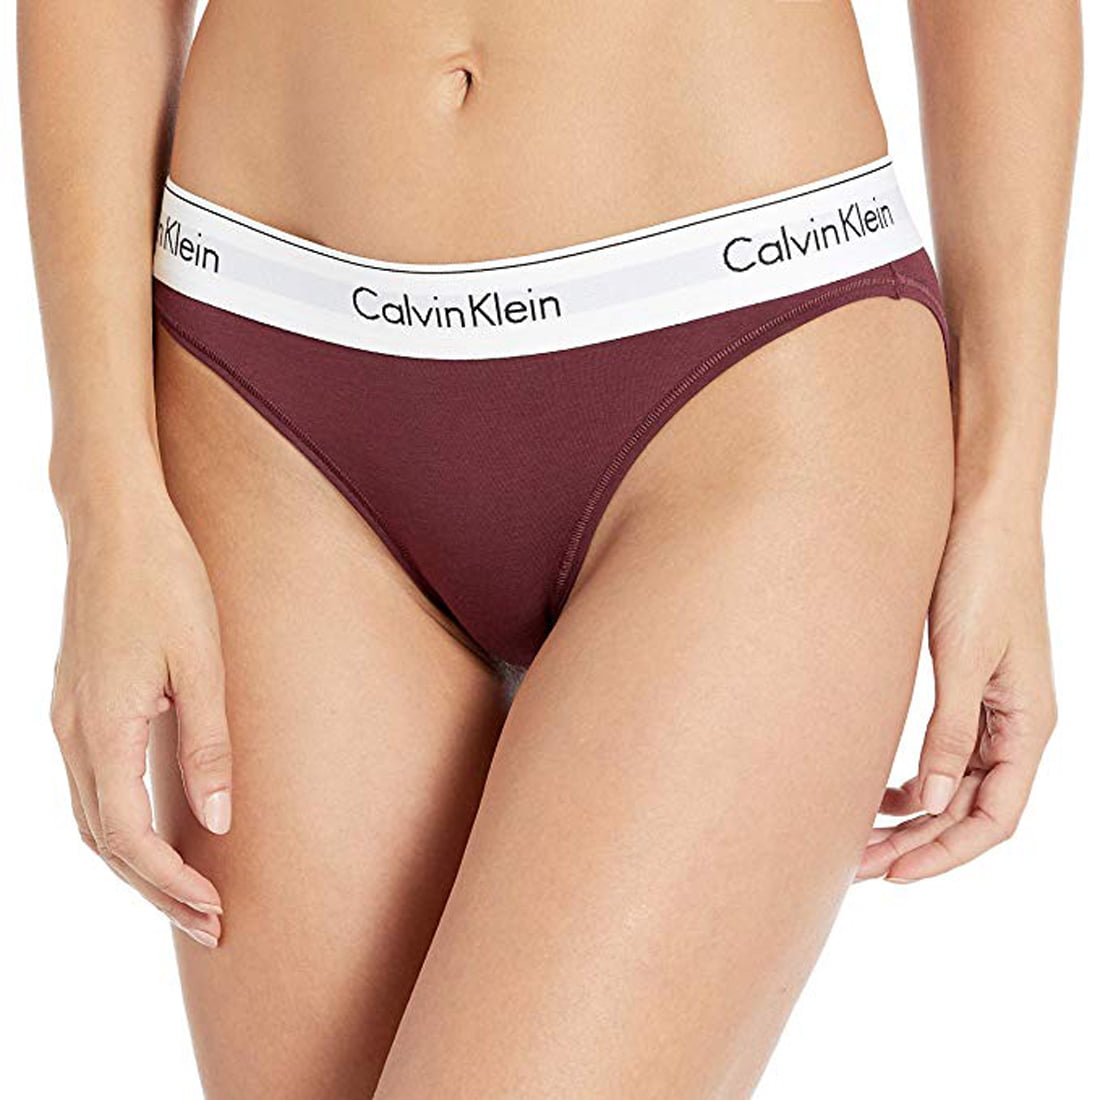 Actualizar 56+ imagen calvin klein maroon underwear